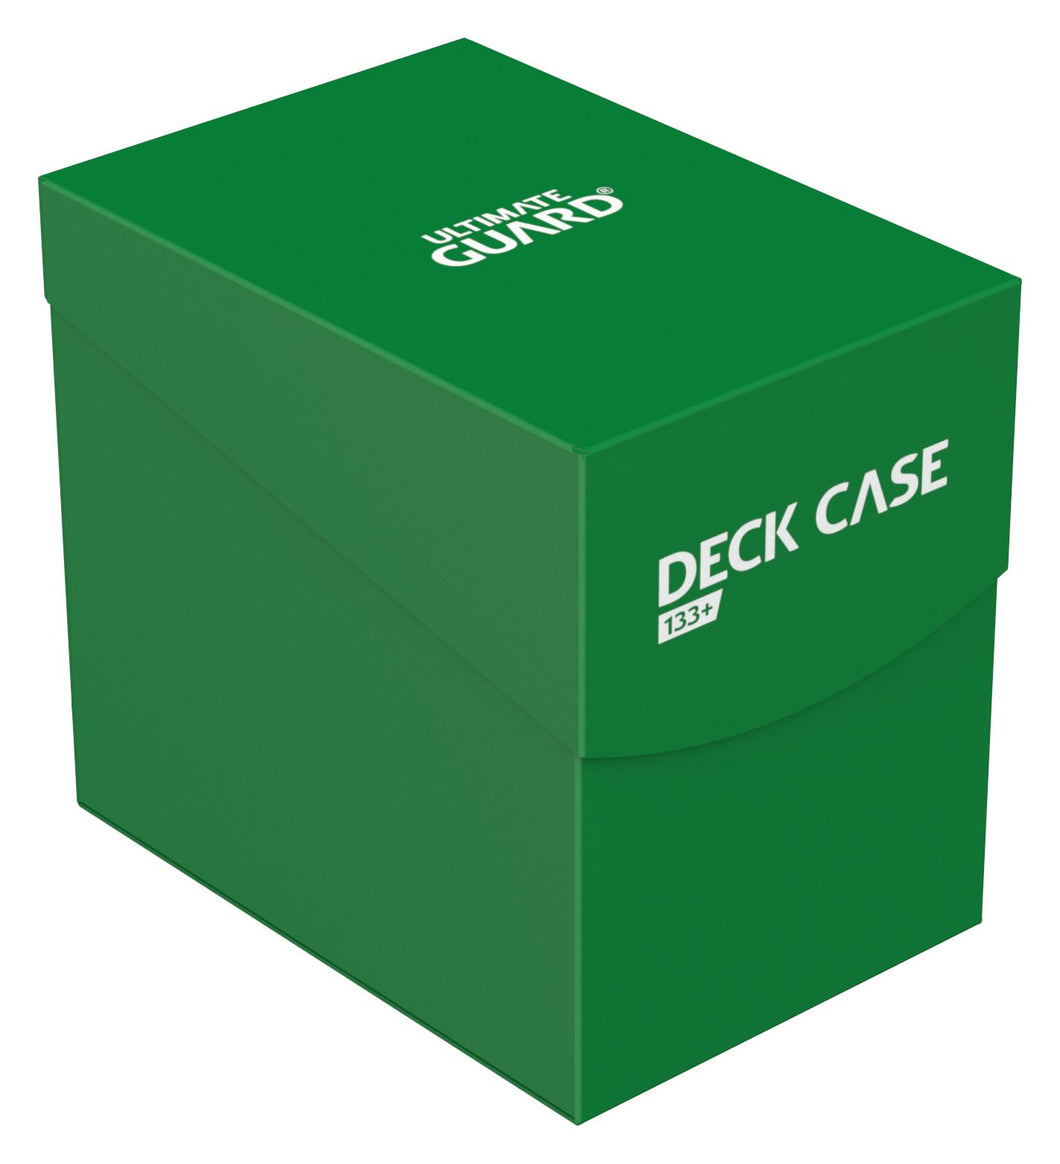 Ultimate Guard Deck Case 133+ (Green)